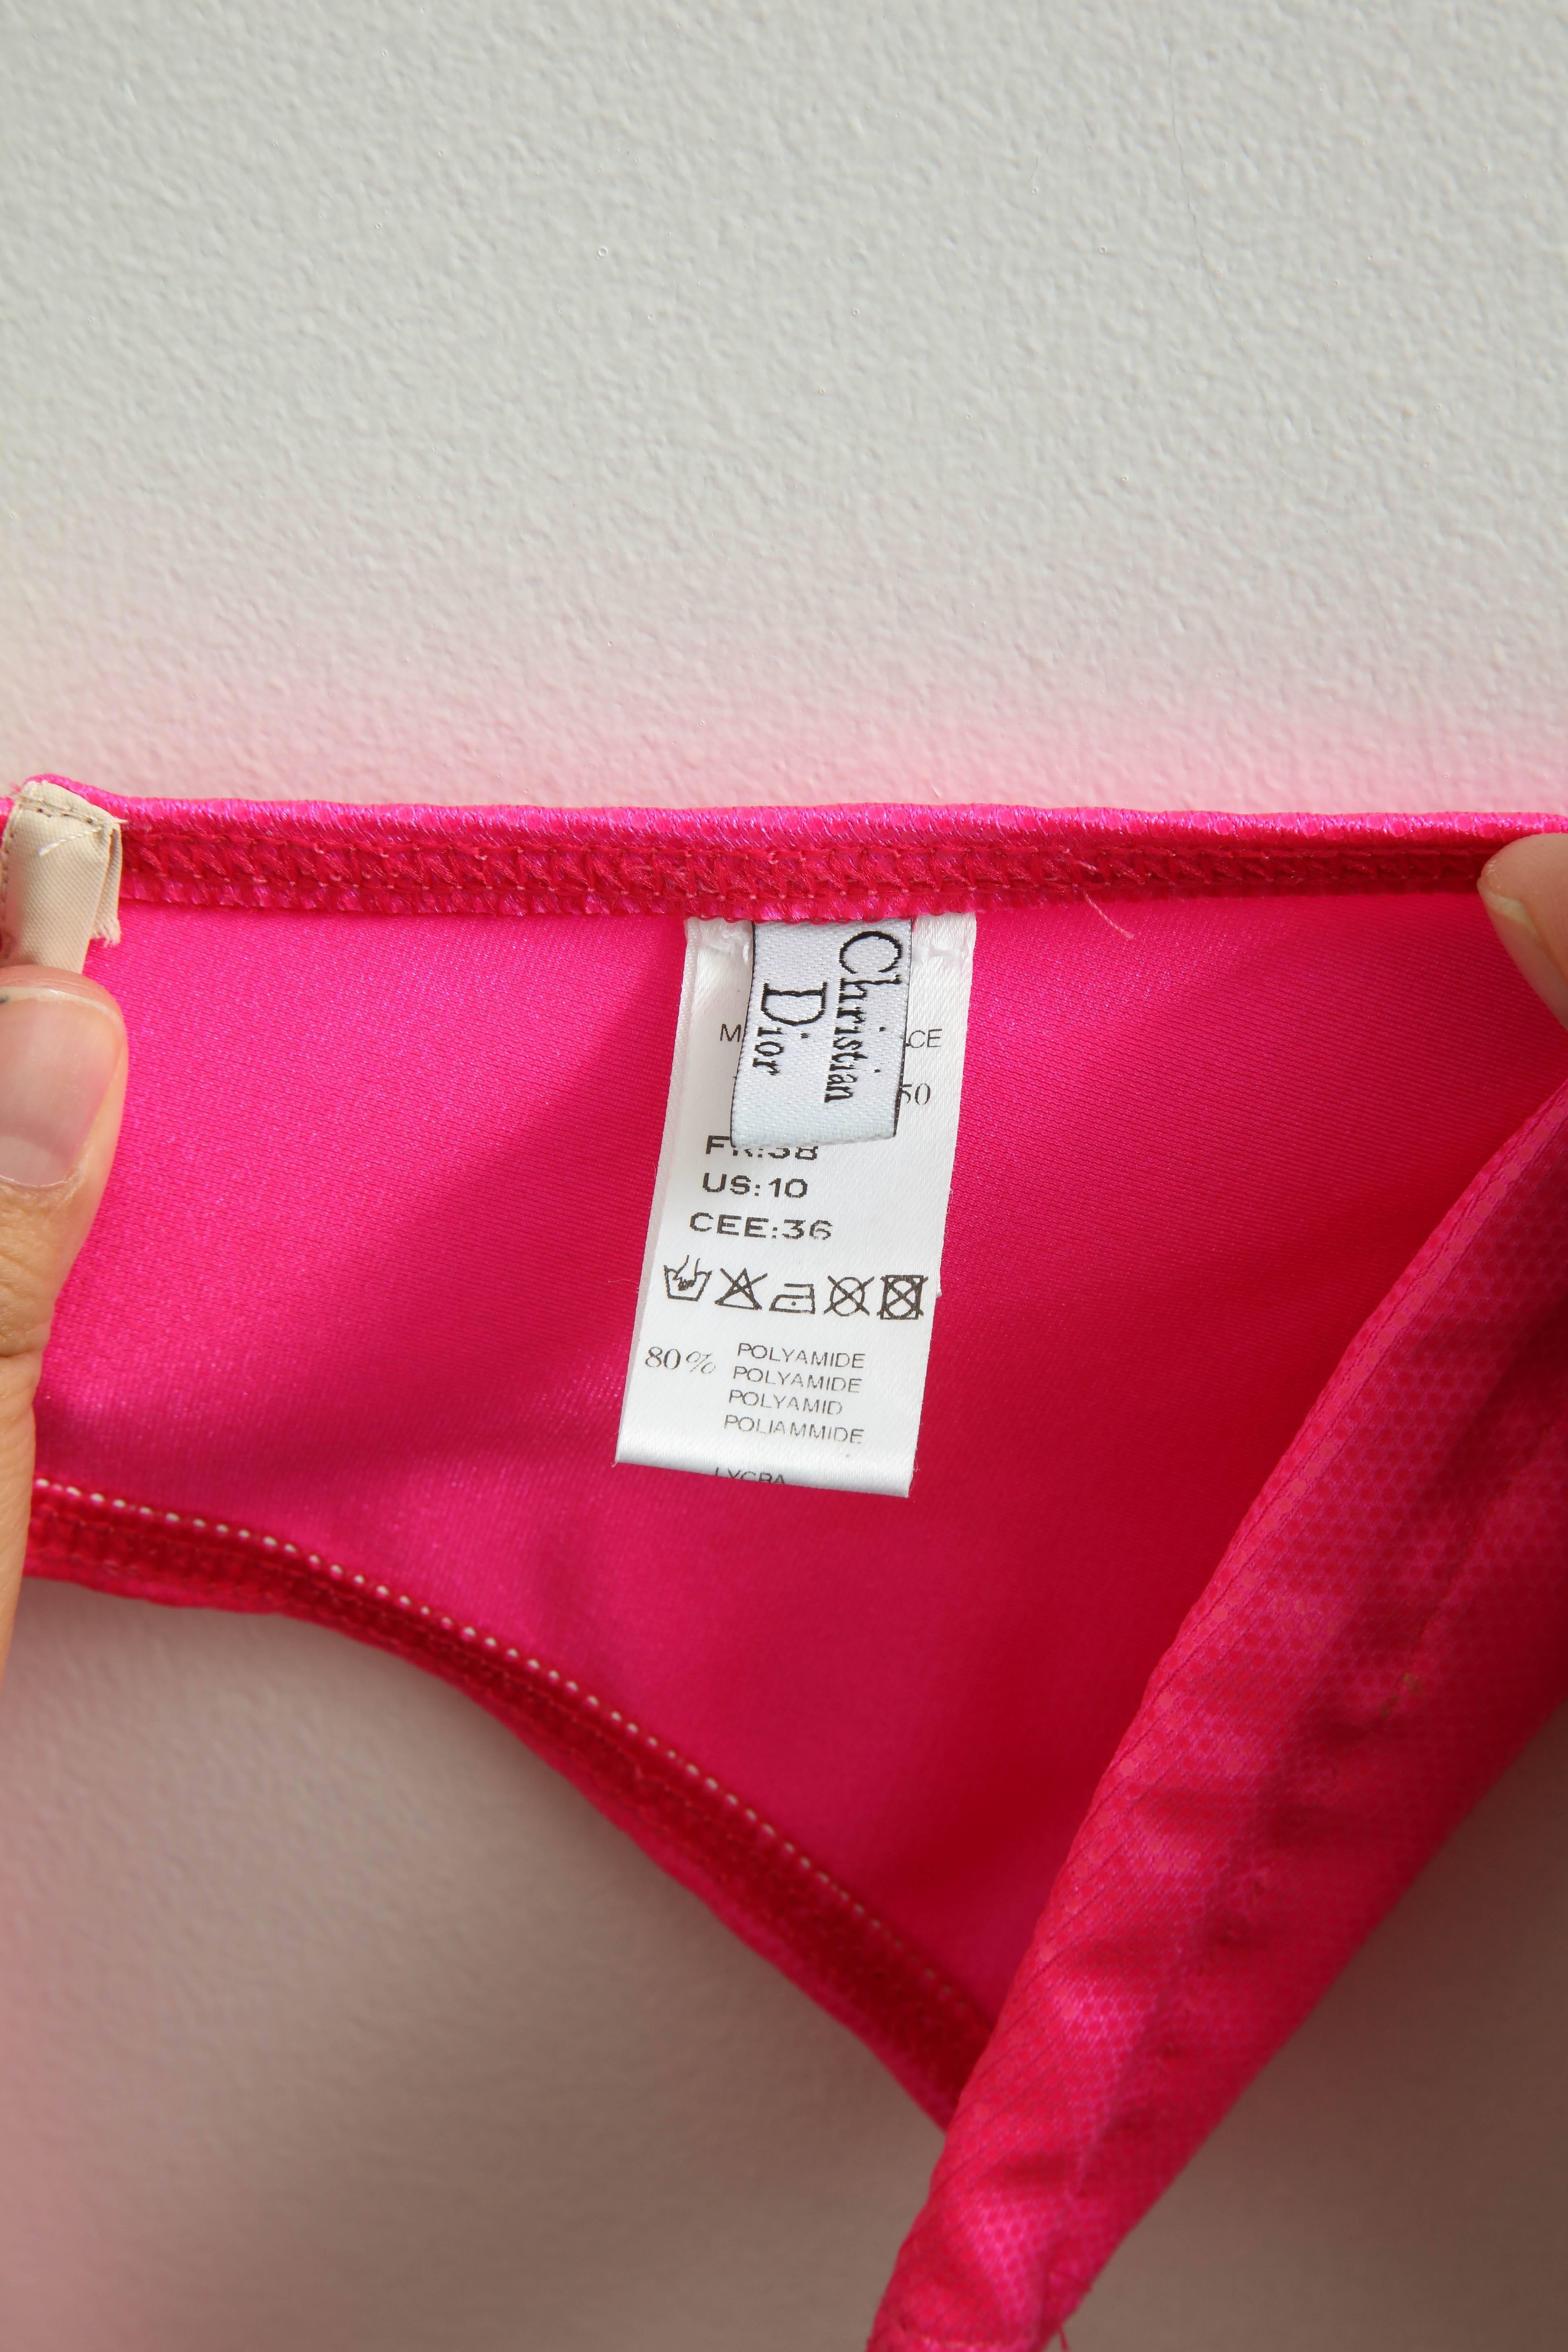 John Galliano for Christian Dior Pink Bikini For Sale 1